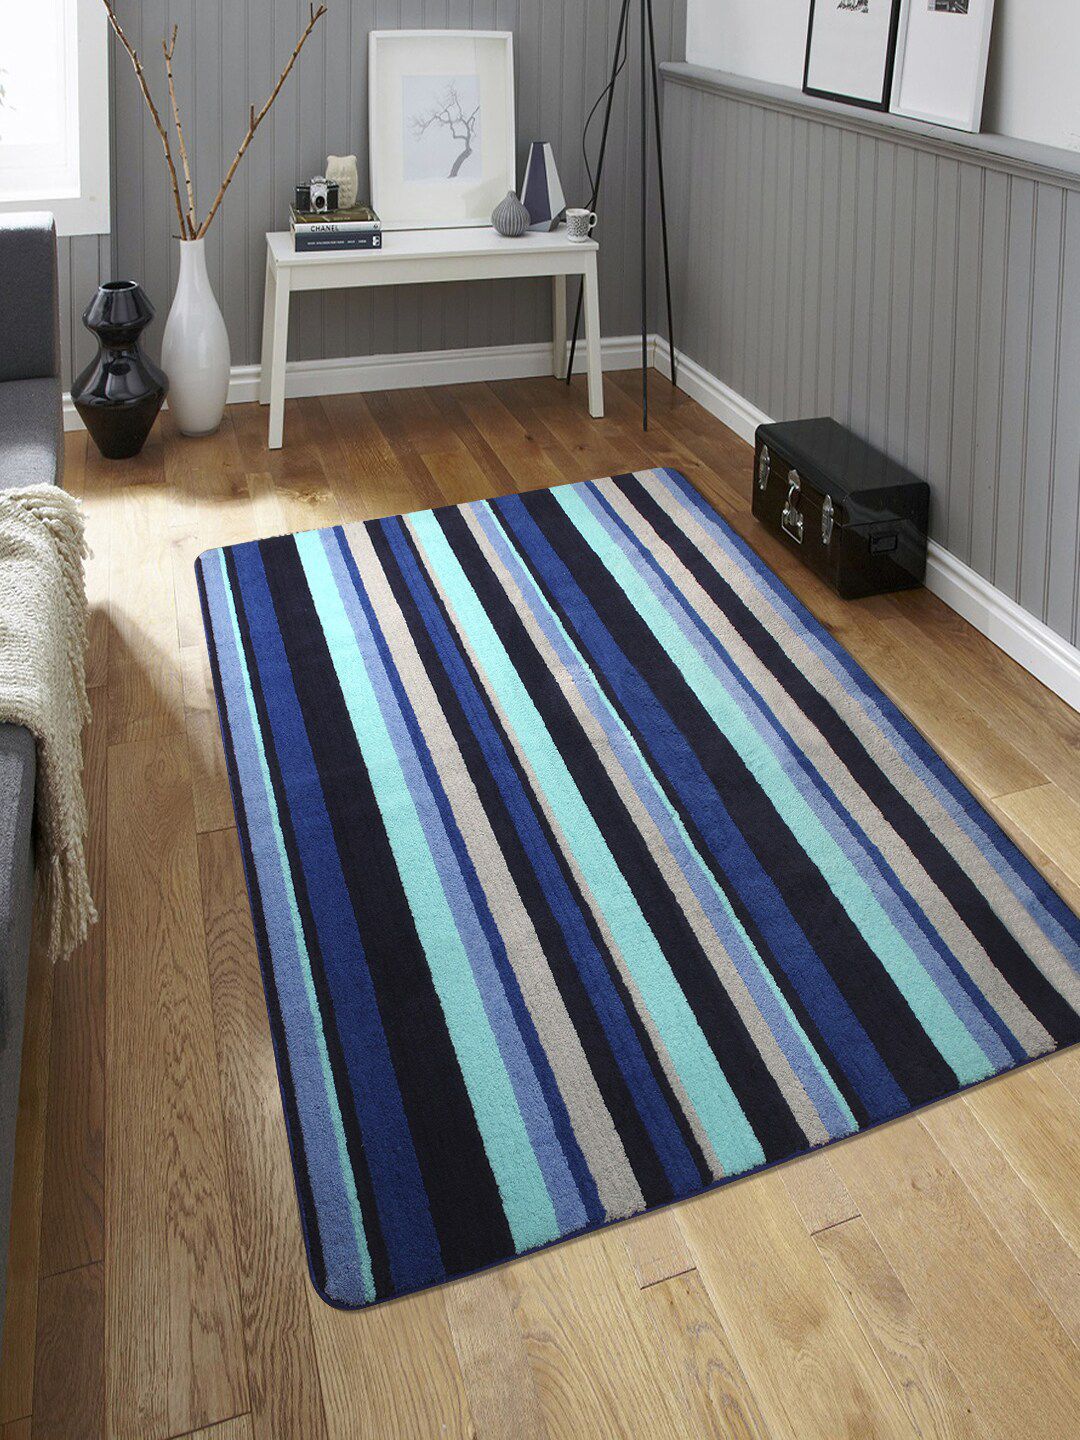 Saral Home Blue & Black Striped Soft Microfiber Anti-Skid Carpet Price in India